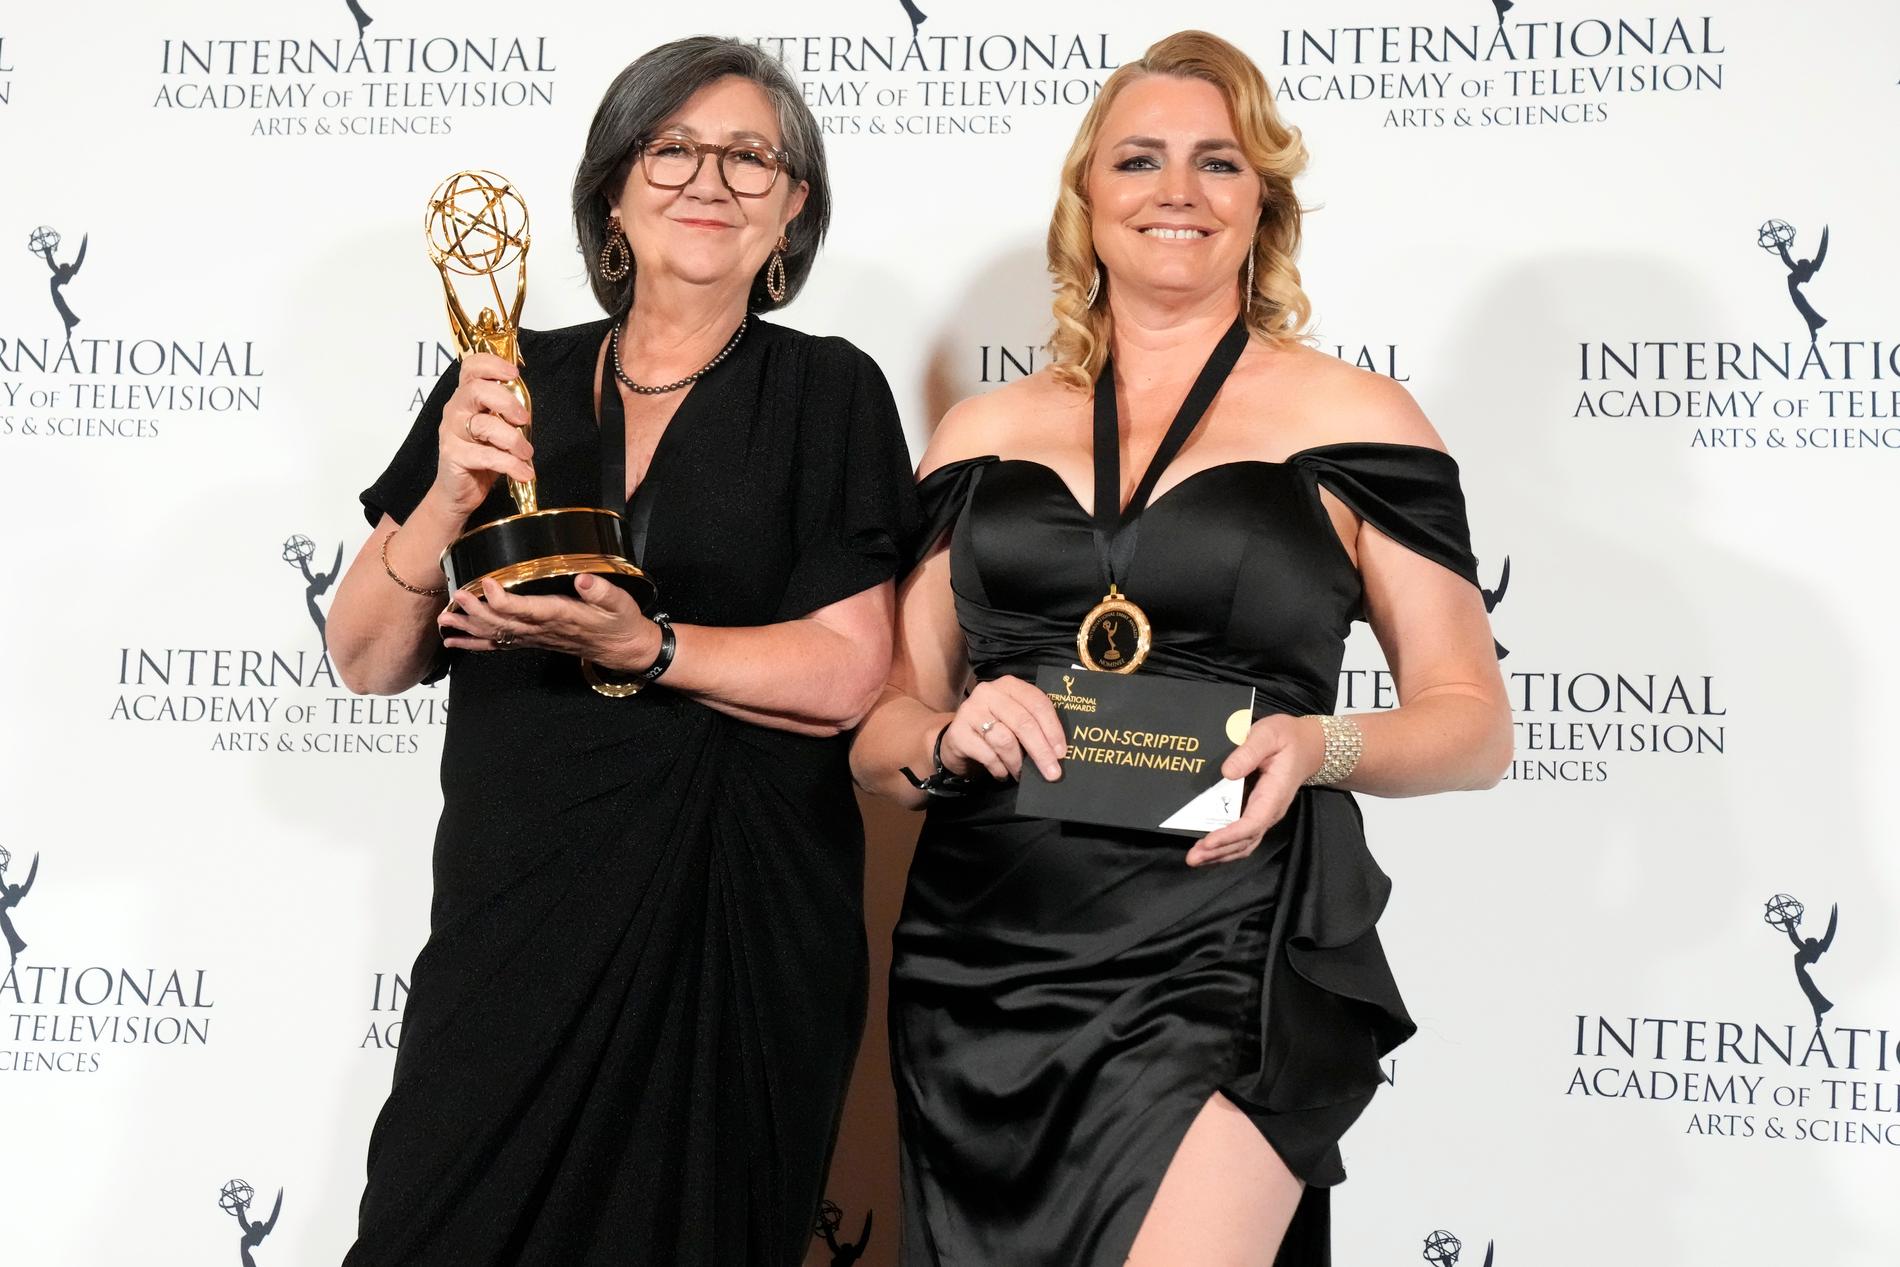 Jenni Wilks och Karina Holden bakom realityserien "Love on the Spectrum" fick en internationell Emmy.